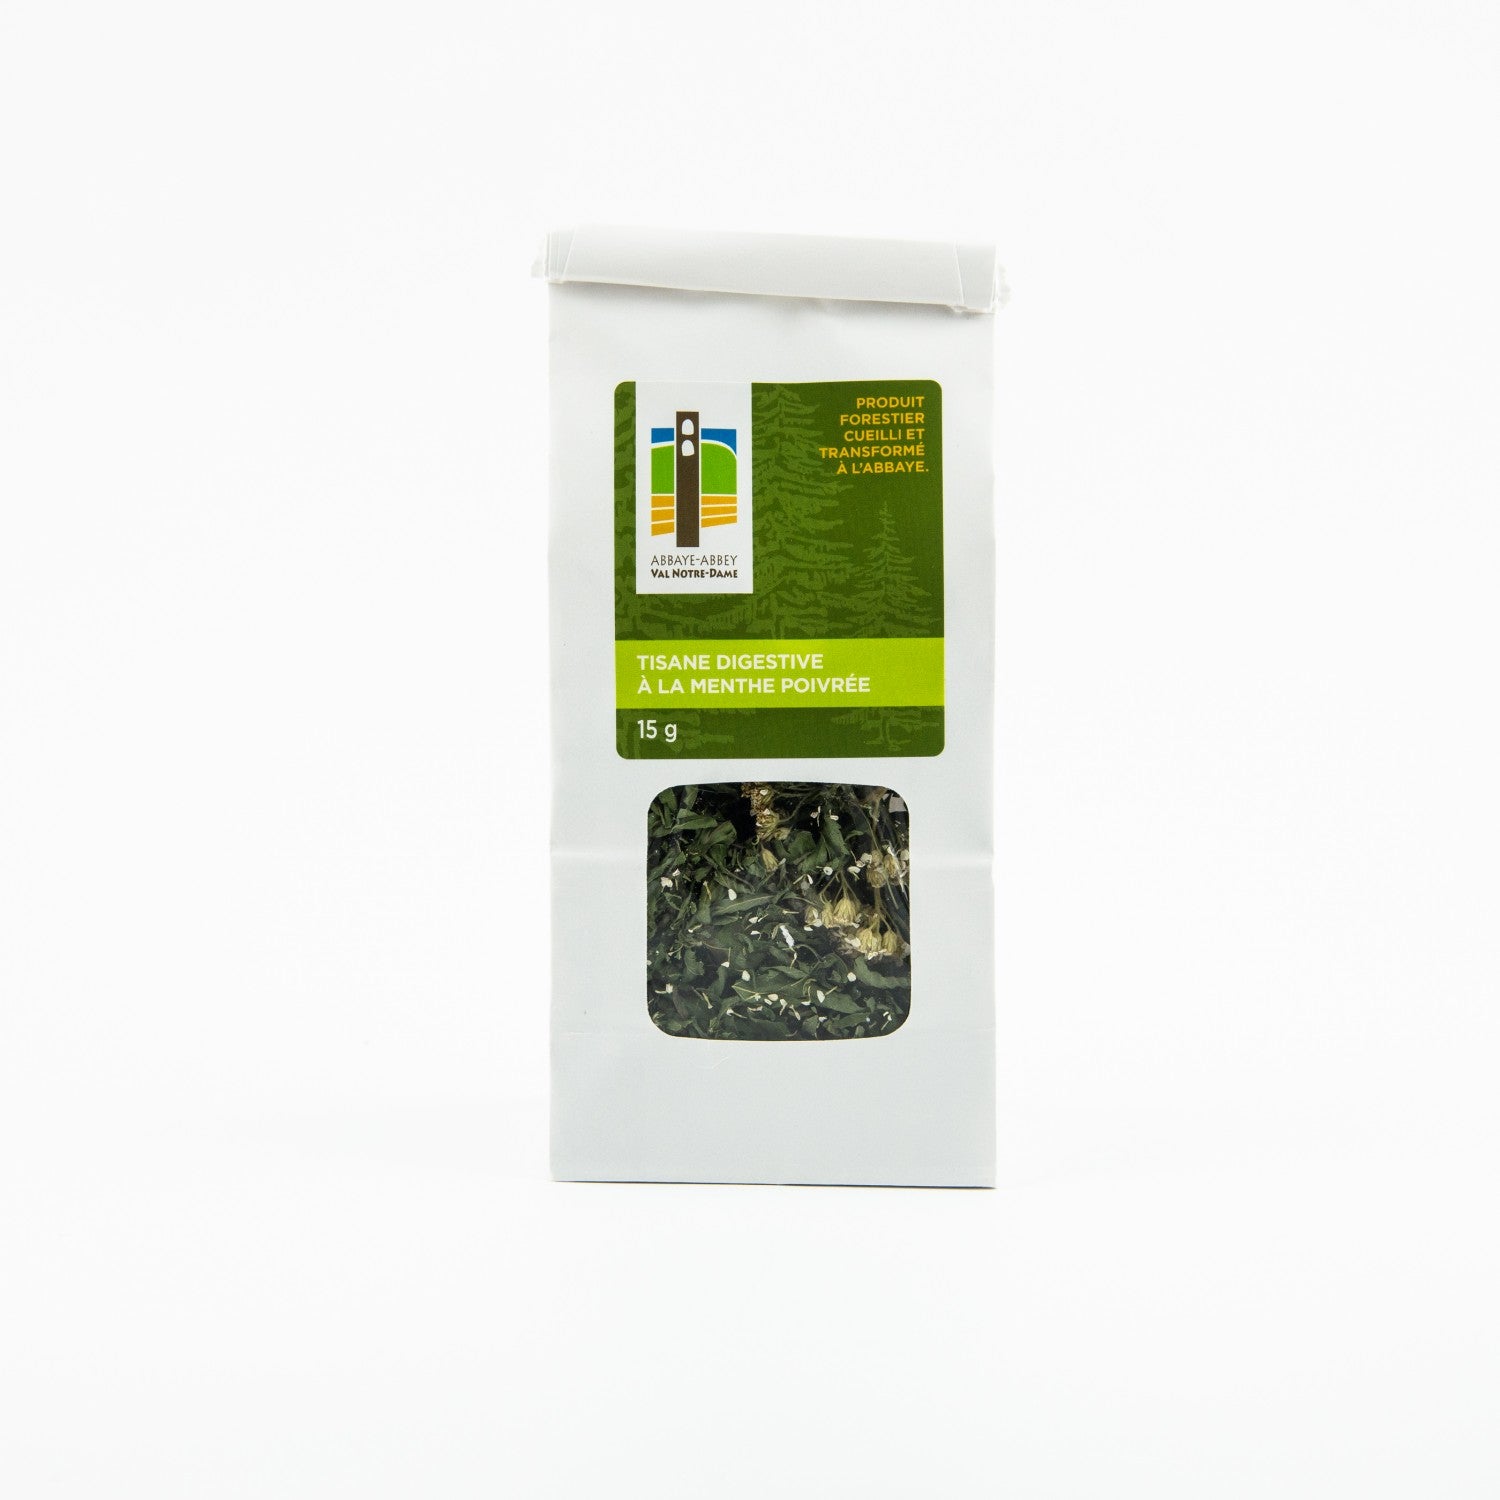 Peppermint digestive herbal tea 15 g